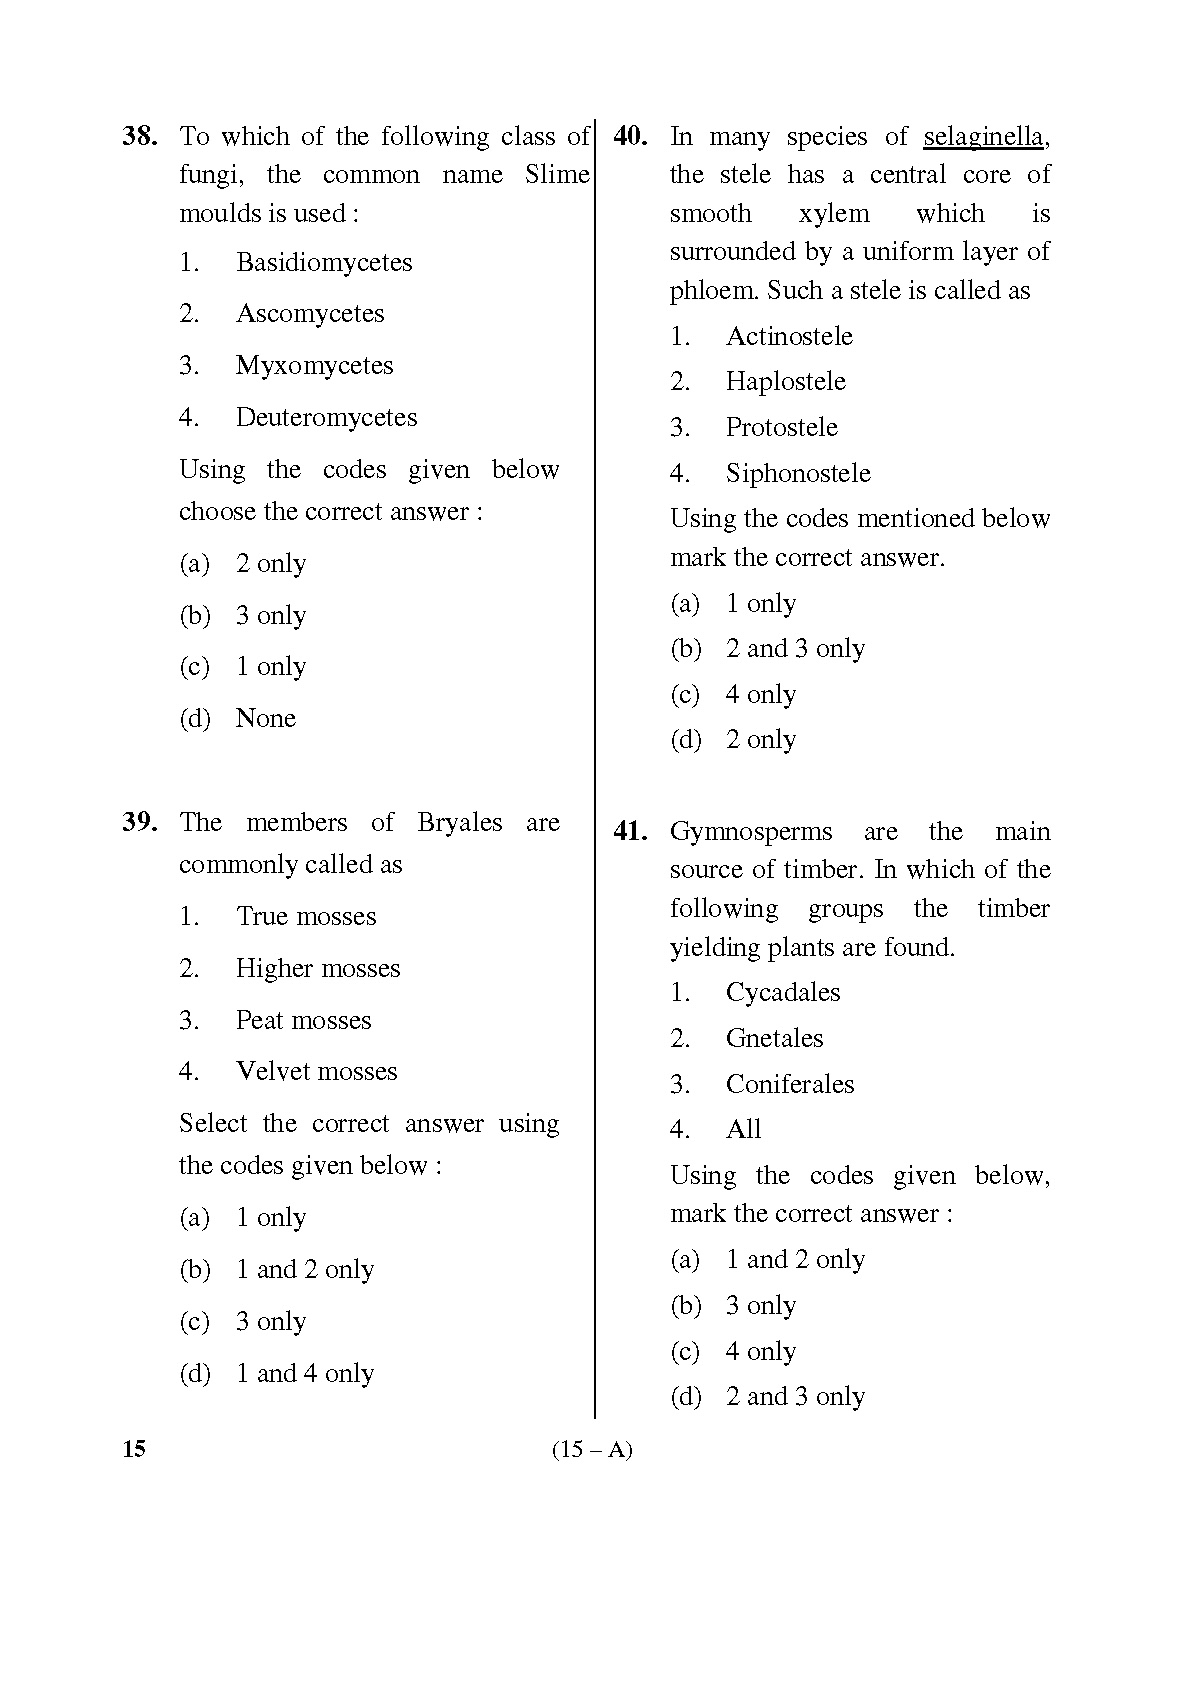 Karnataka PSC General Science Teachers Exam Sample Question Paper Subject code 15 15